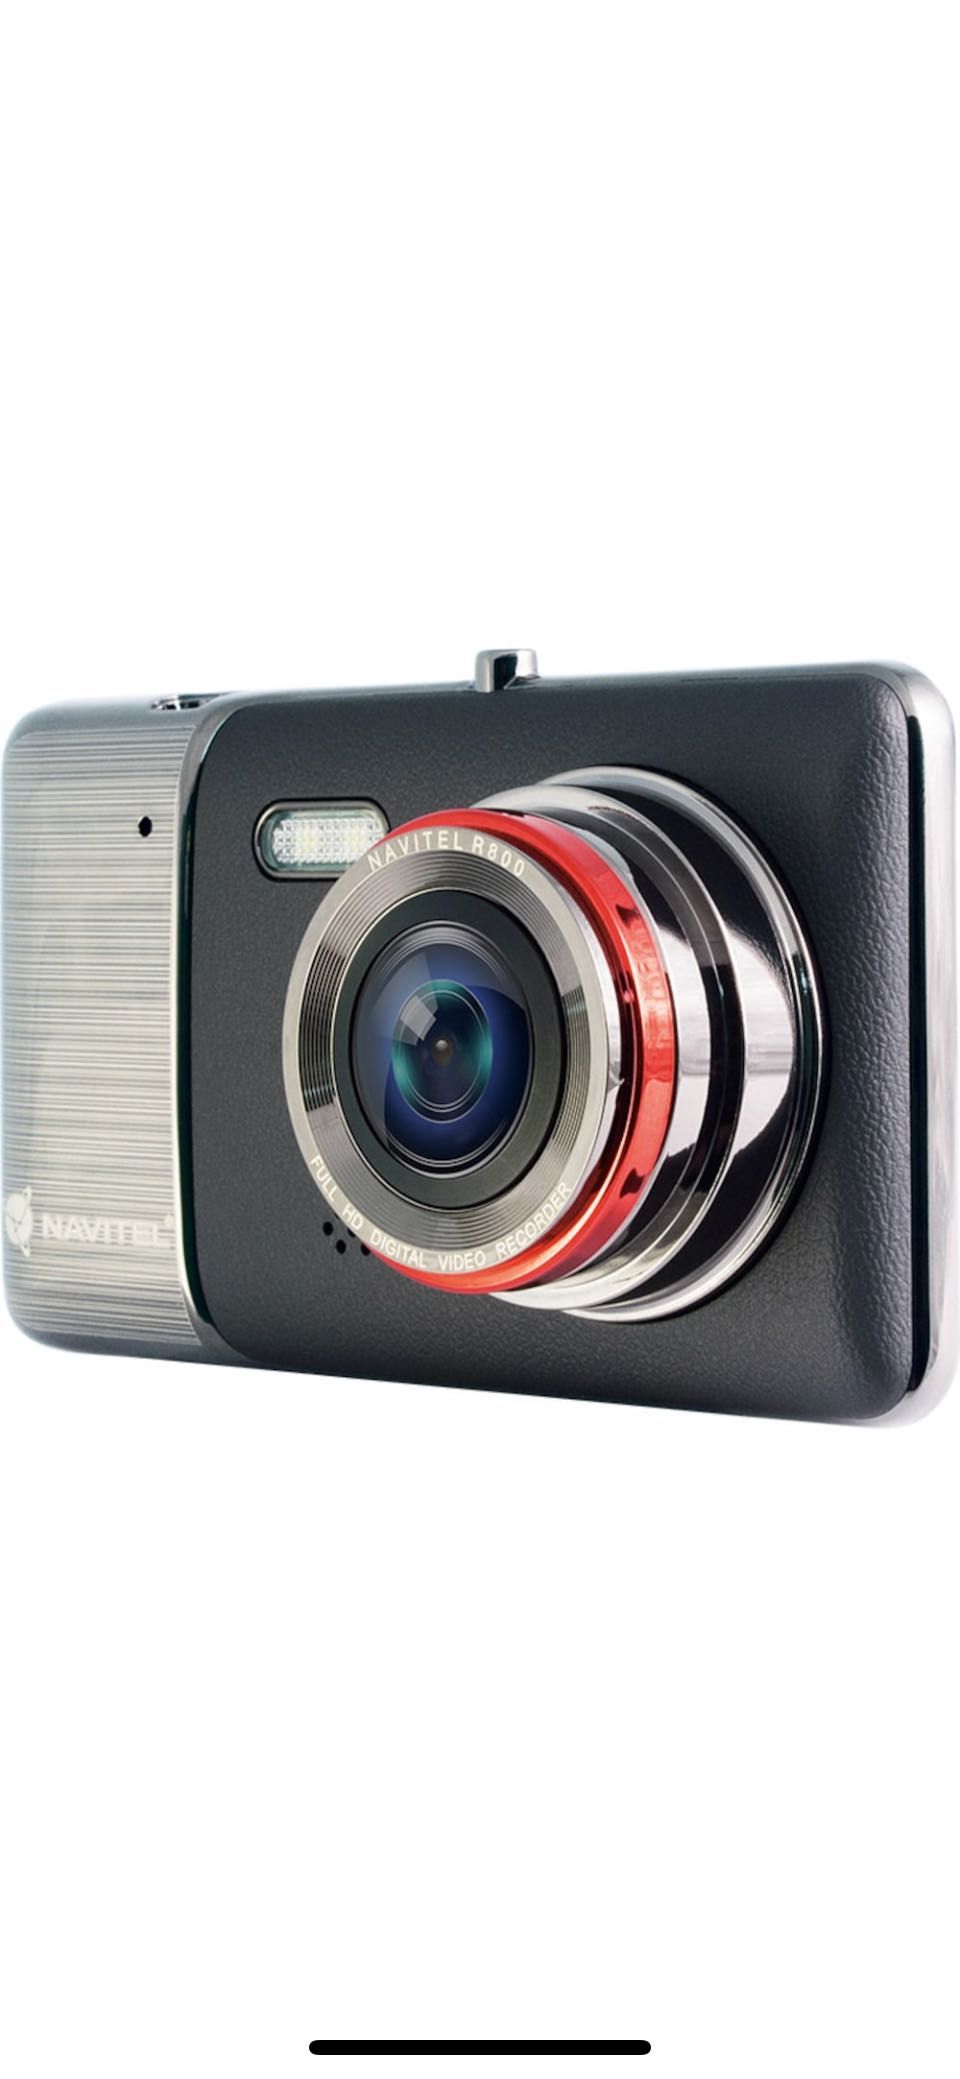 Camera auto navitel R800